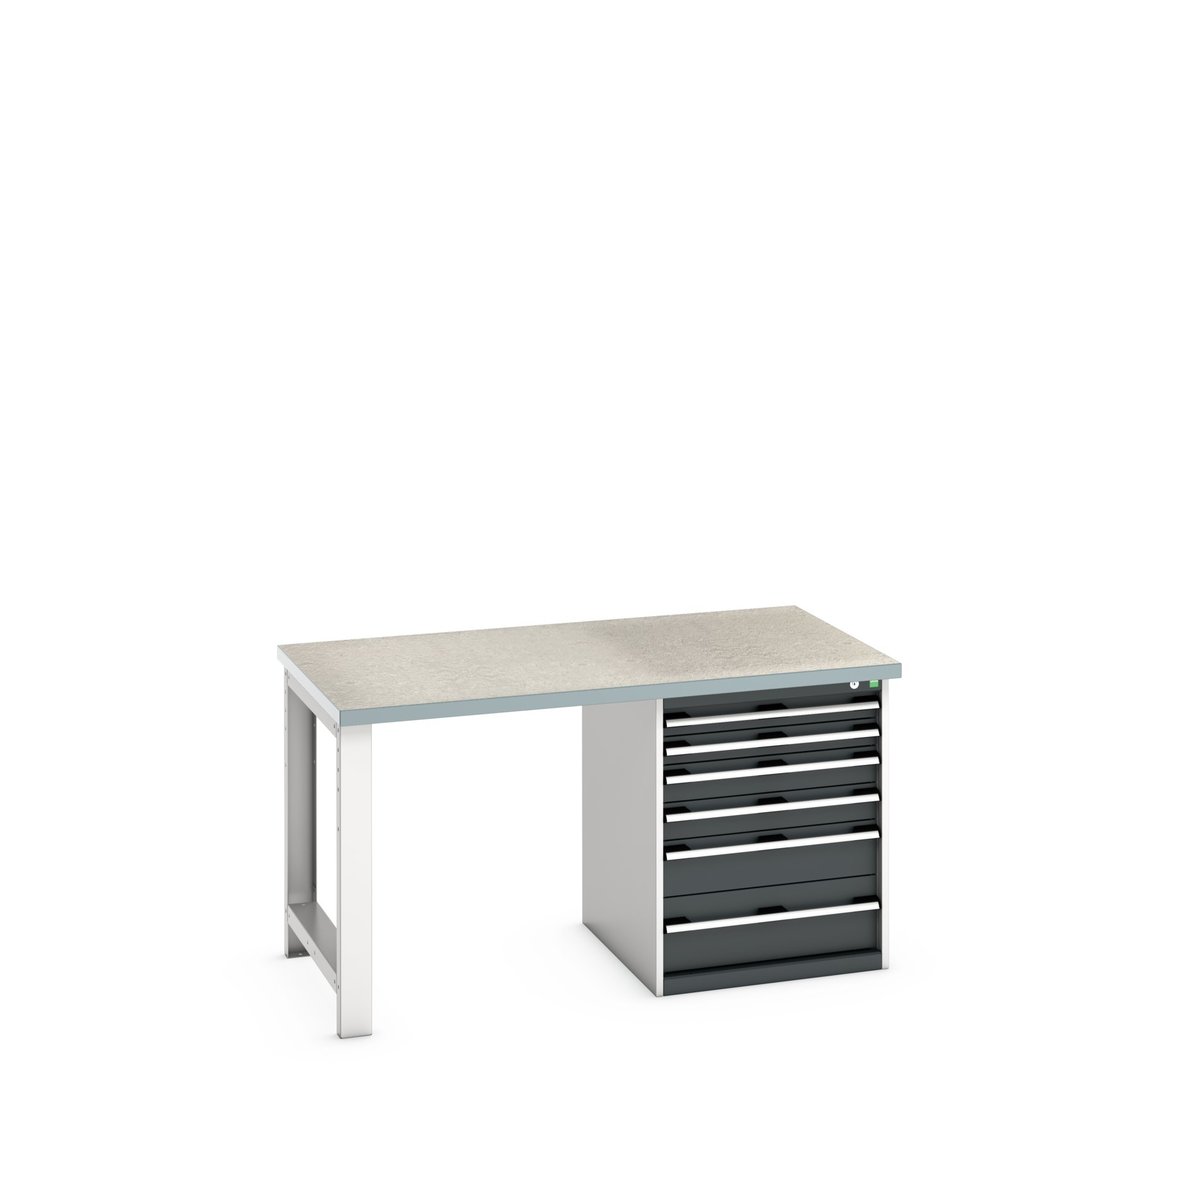 41004114. - cubio pedestal bench (lino)